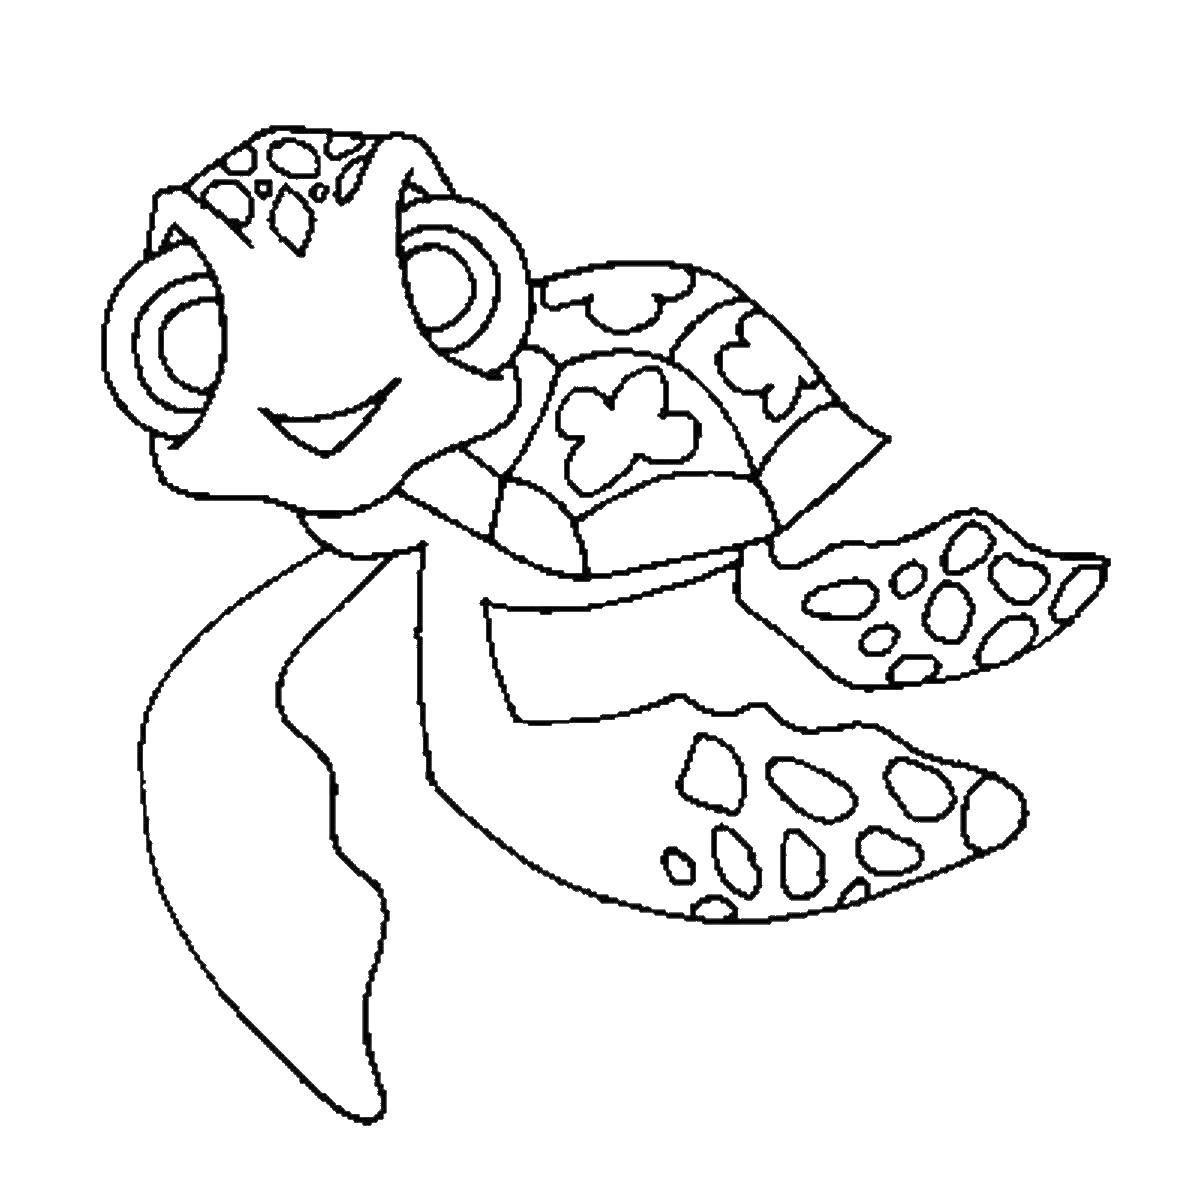 Coloring Sea turtle. Category skull. Tags:  sea turtle.